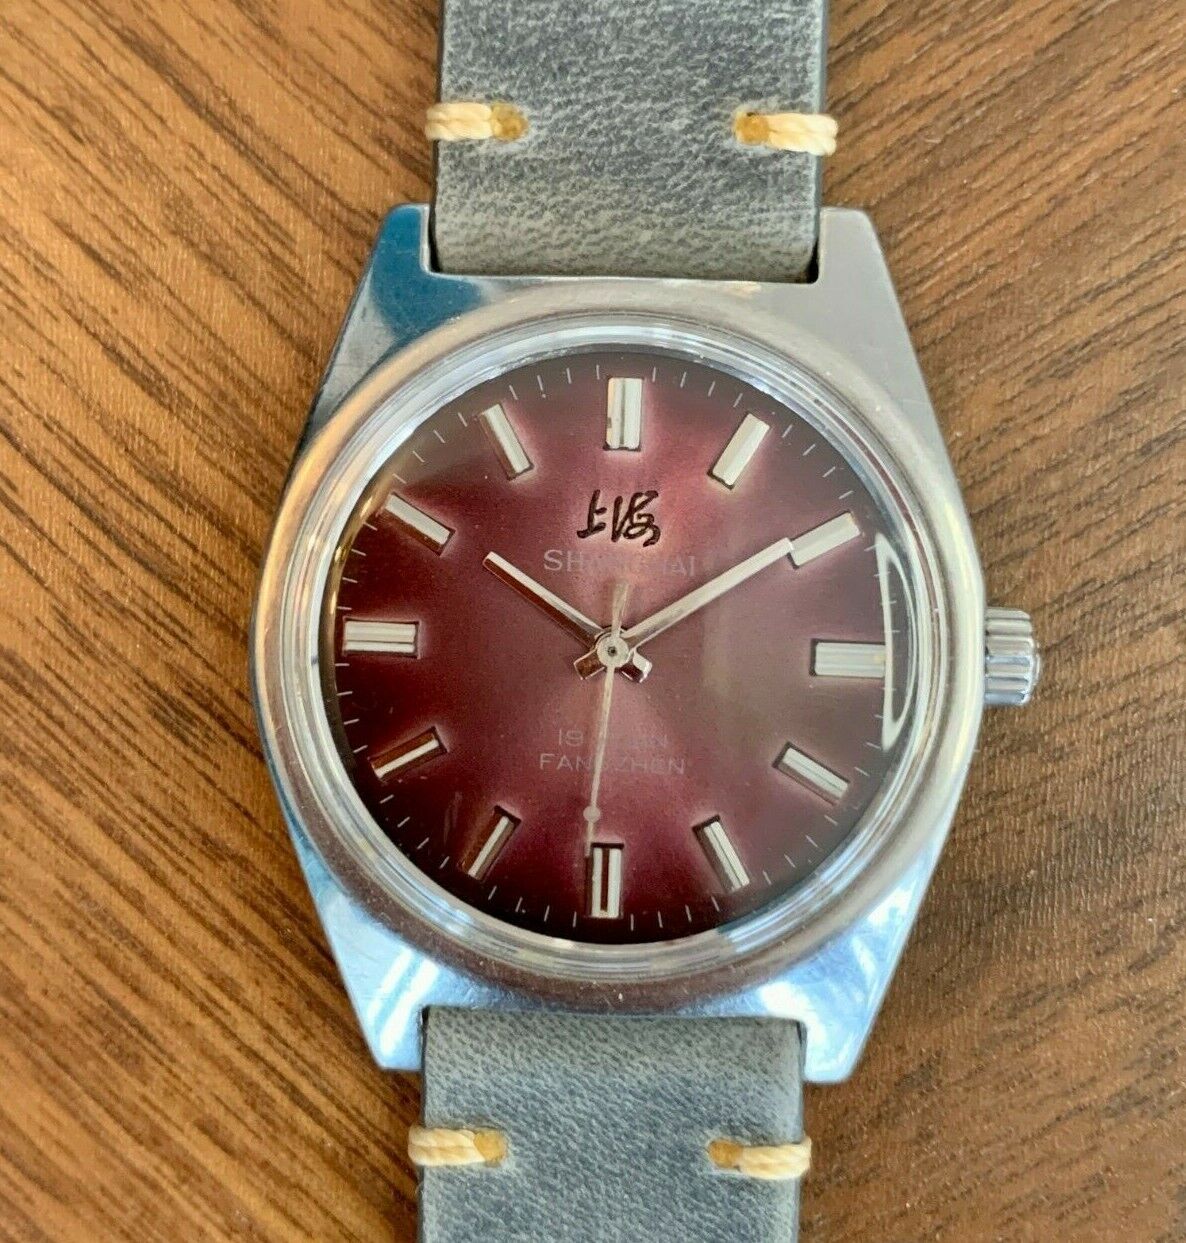 Montre Vintage Watch Chine Shanghai factory aubergine sunburst dial 7120 1970s